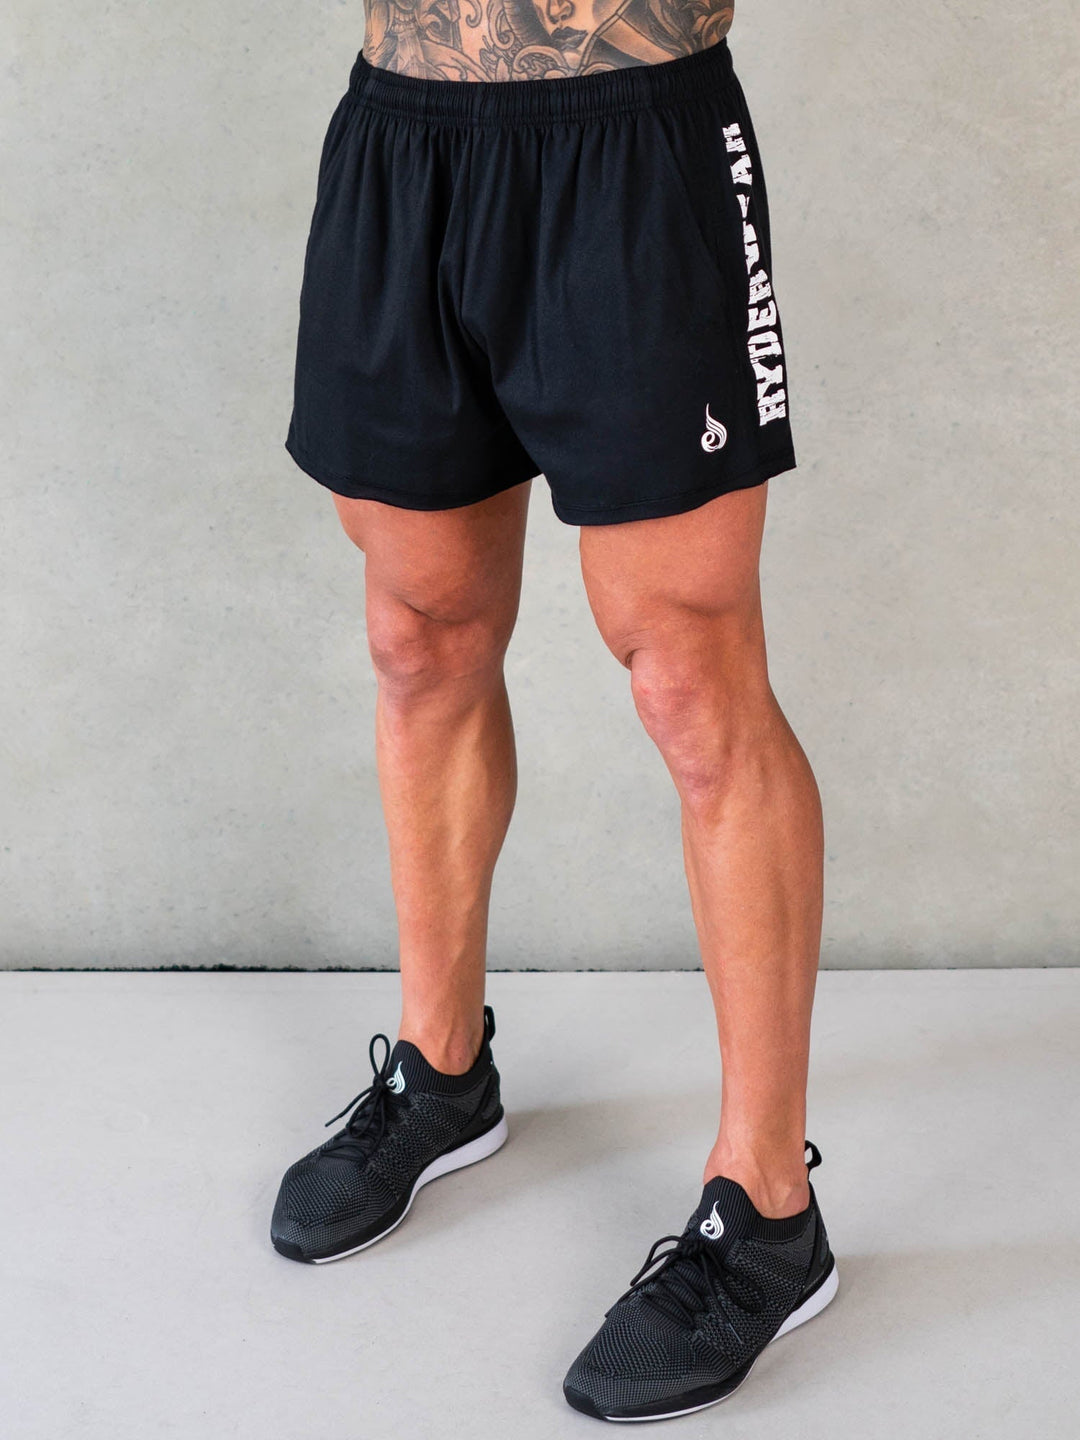 Octane Arnie Shorts - Faded Black Clothing Ryderwear 